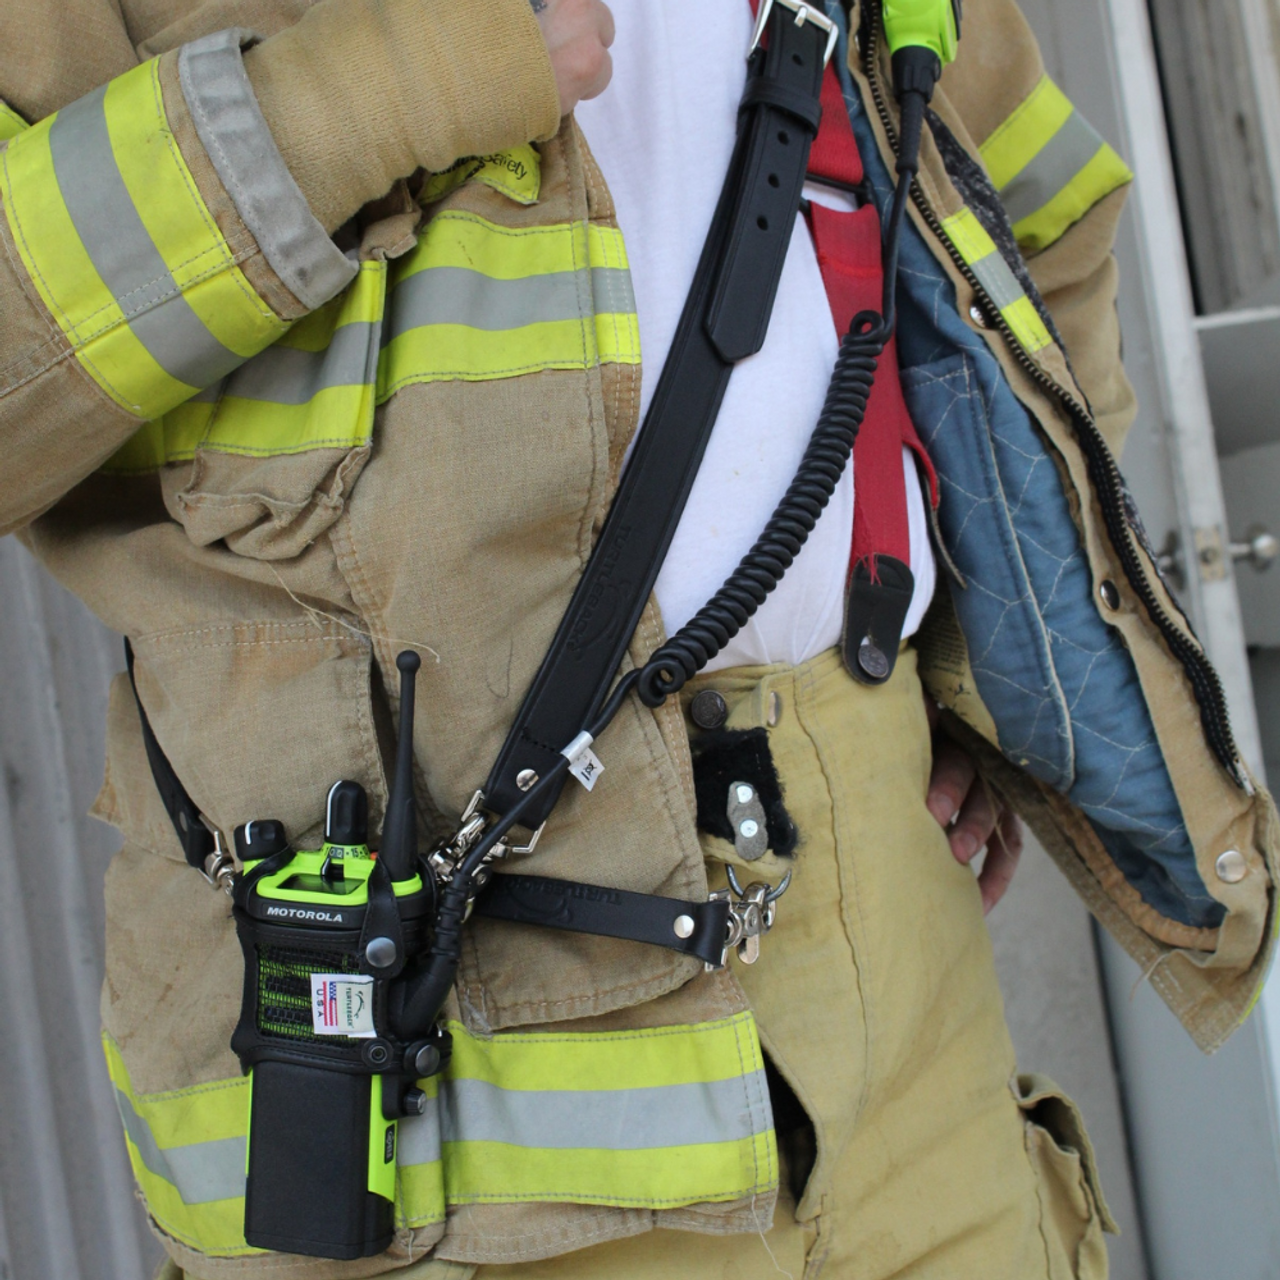  Boston Leather Firefighter's Radio Strap/Belt